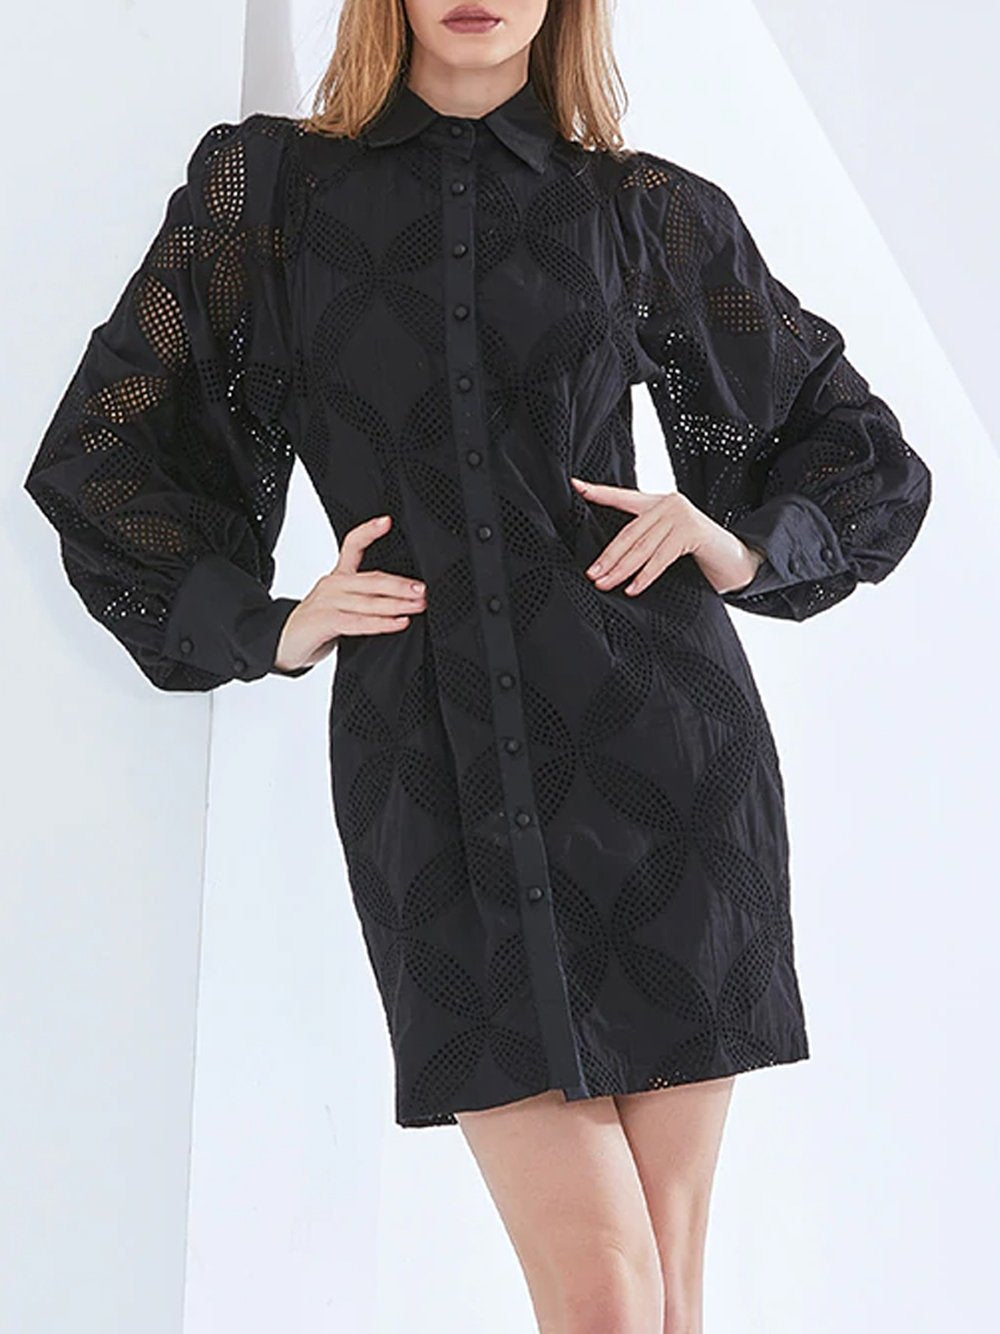 NORA Lace Mini Dress in Black